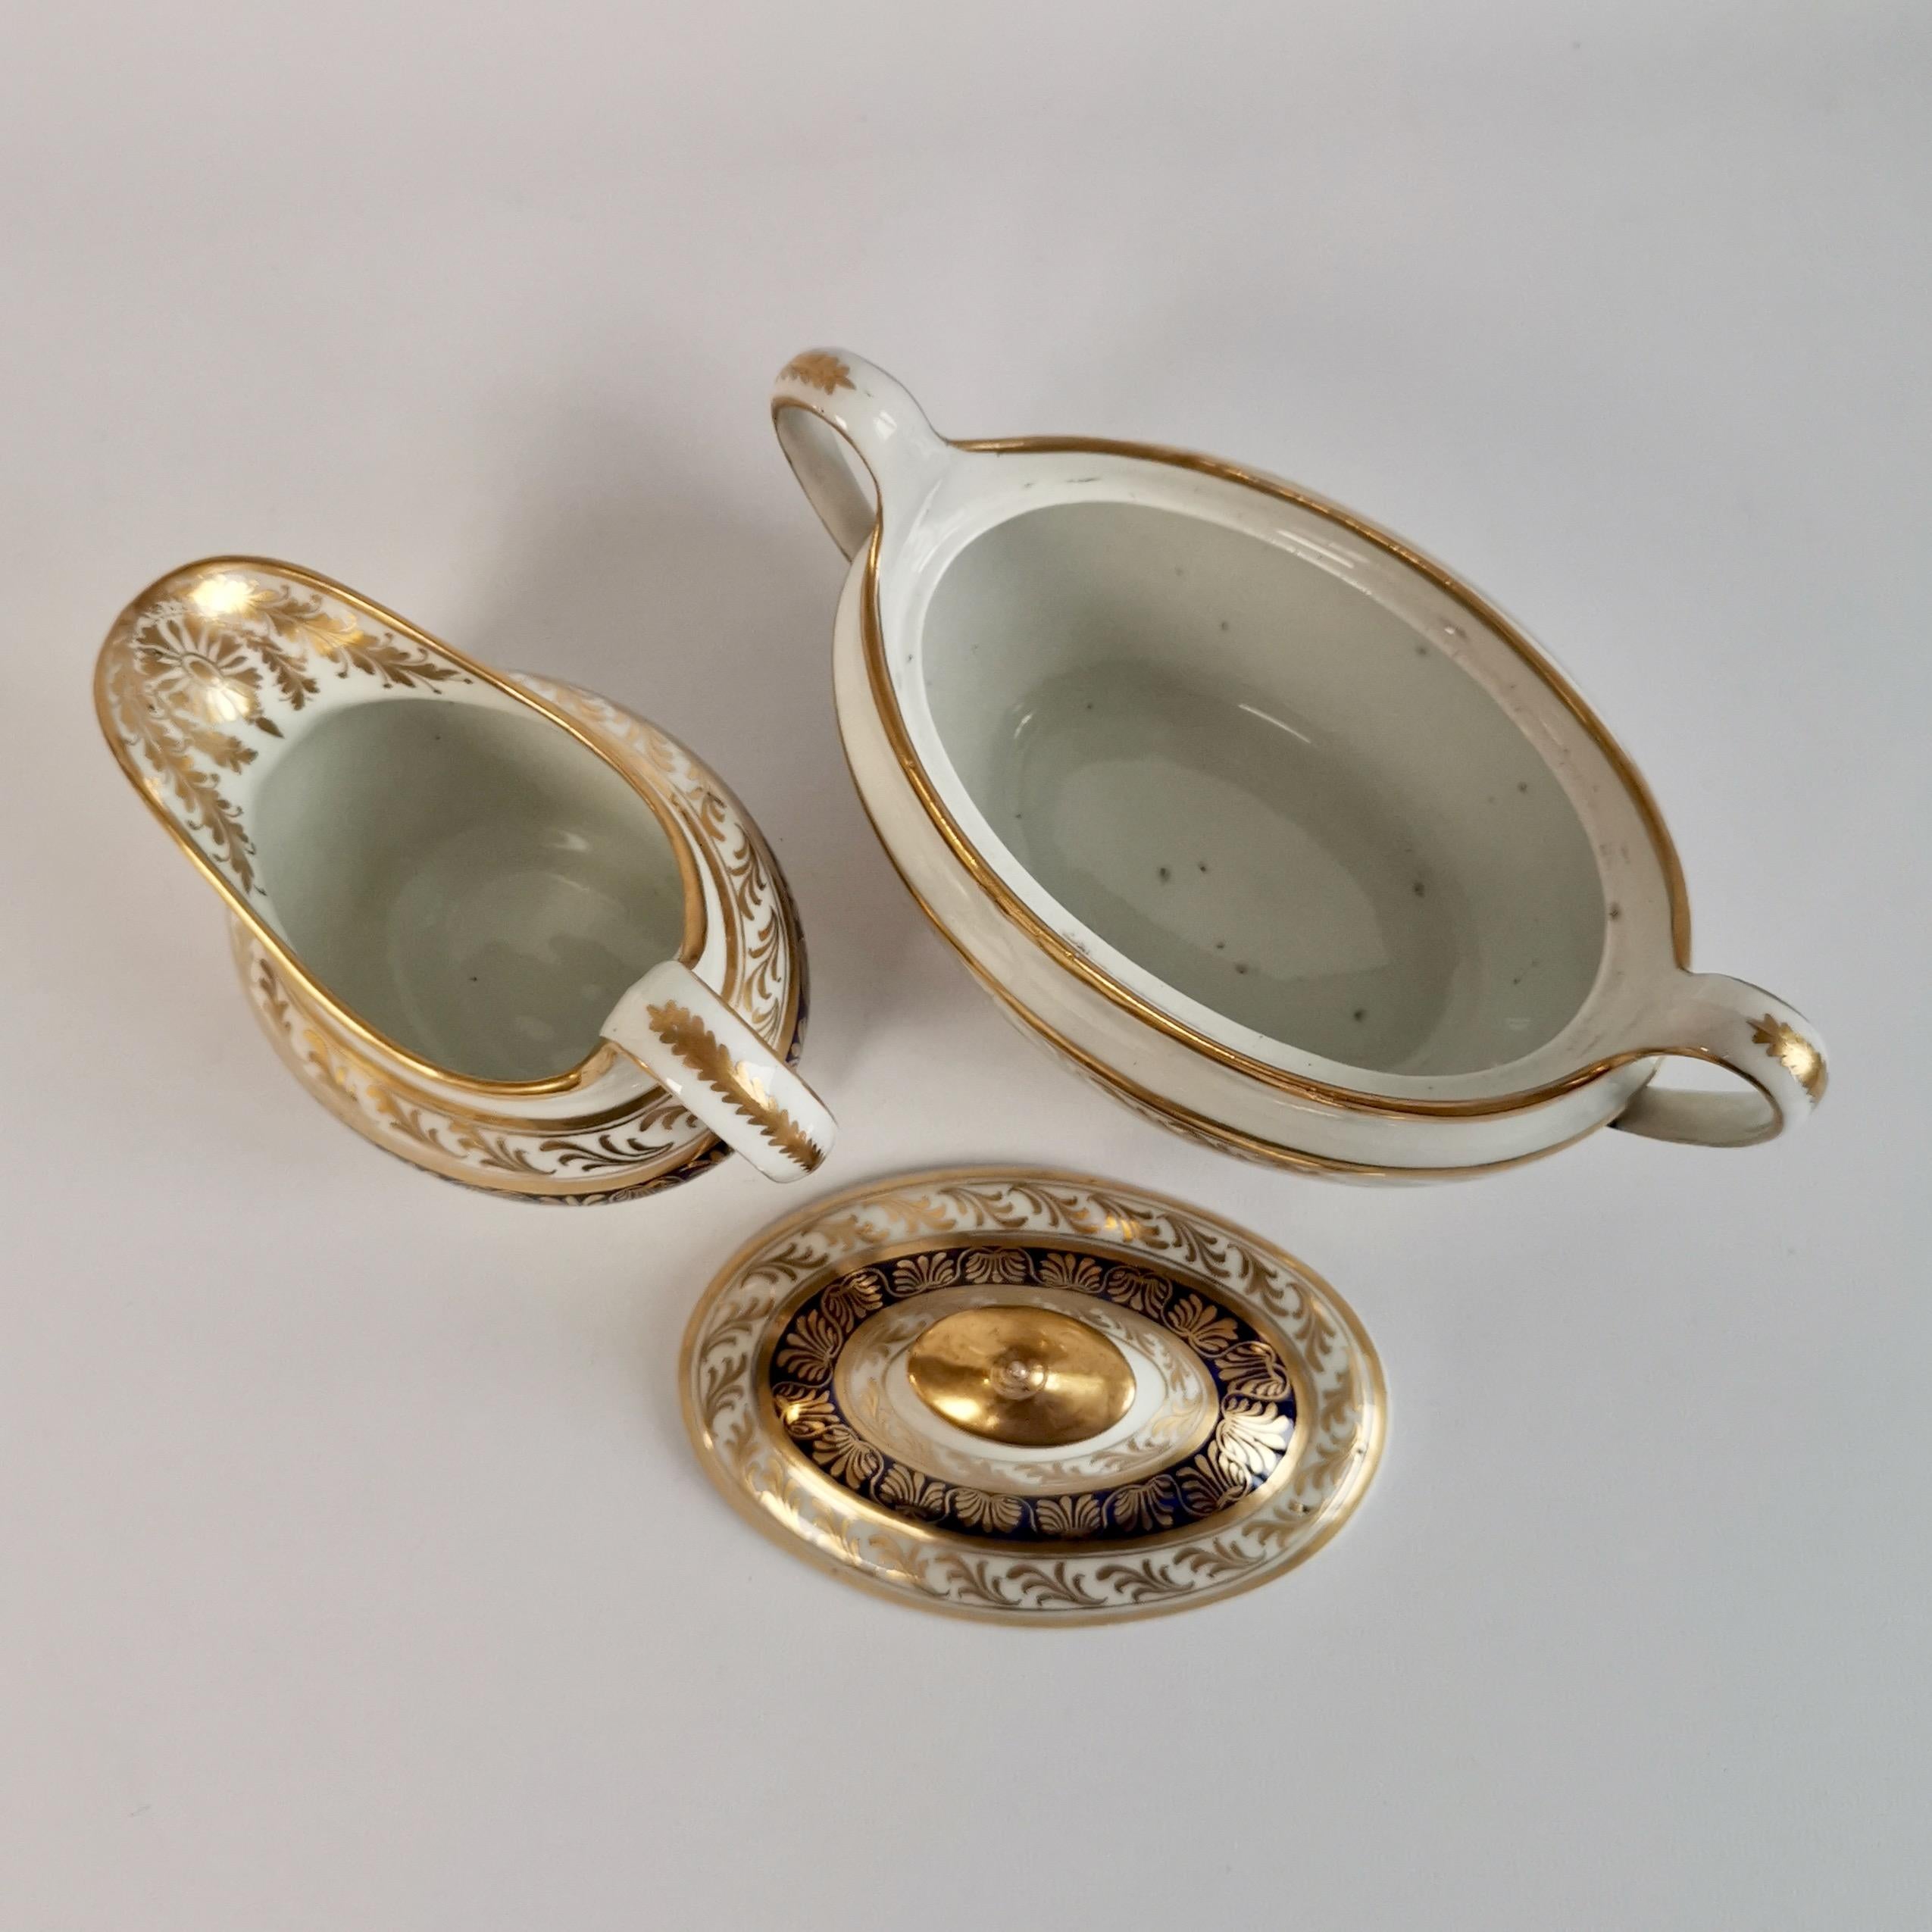 New Hall Porcelain Tea Service, Cobalt Blue and Gilt, Regency ca 1810 8